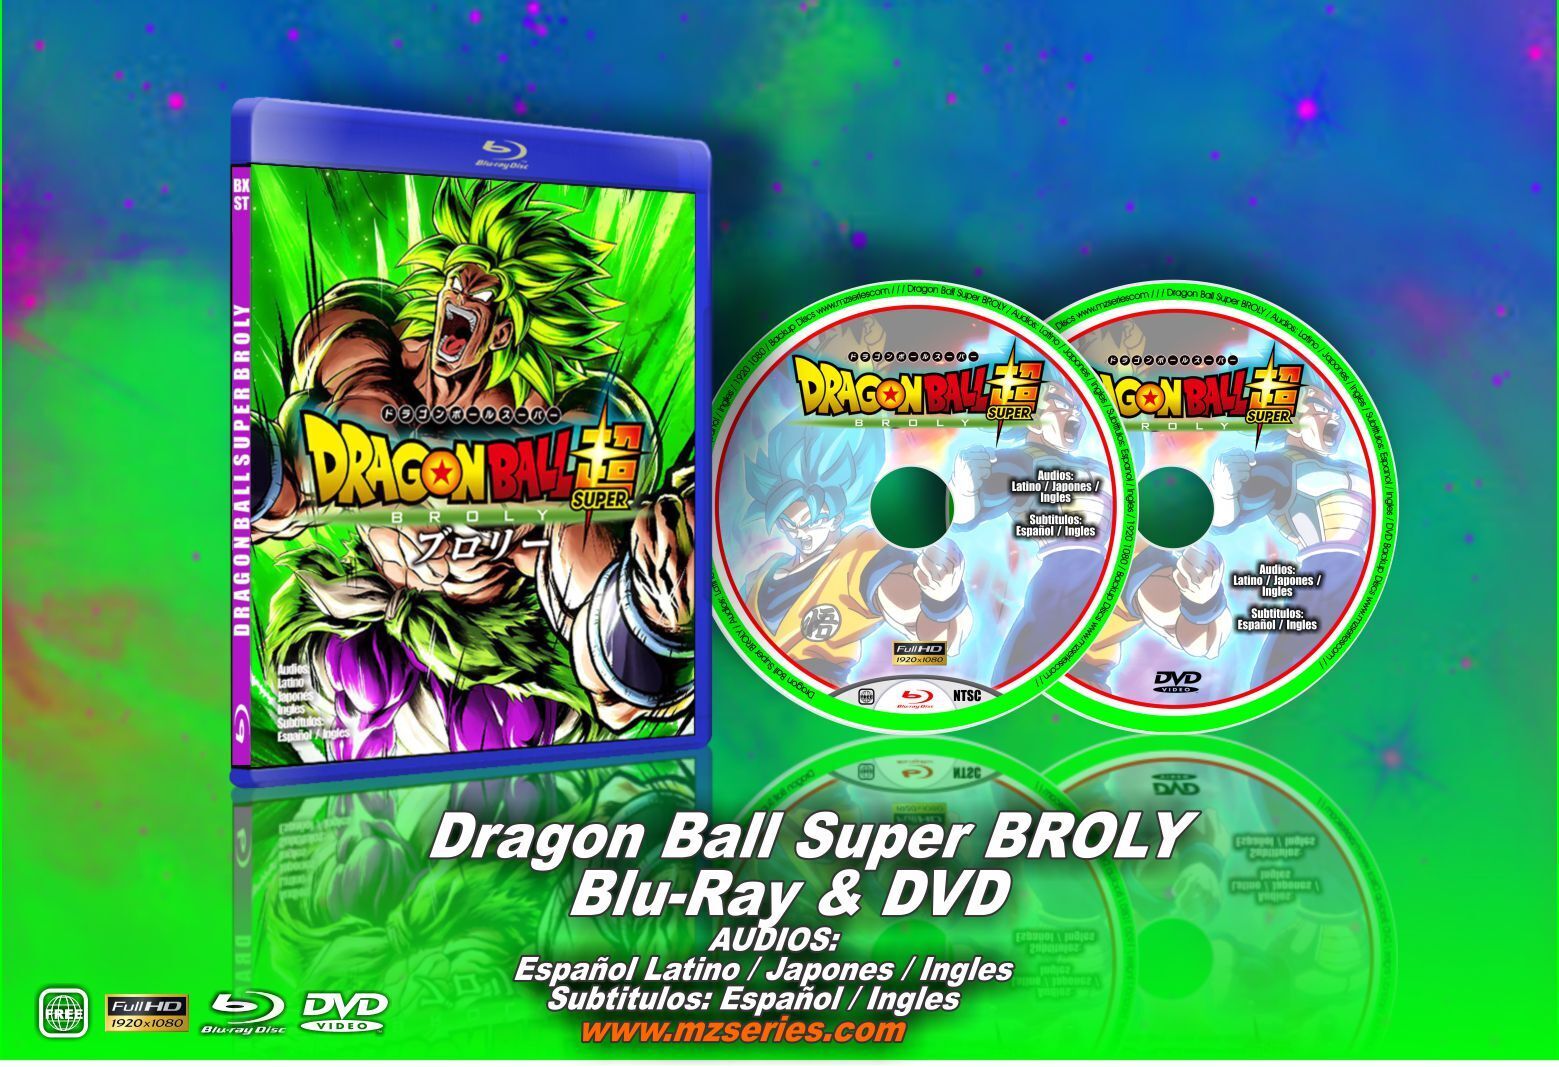 Dragon Ball Super Broly BluRay & DVD Latino, ingles japones subts esp ing  boxset | eBay